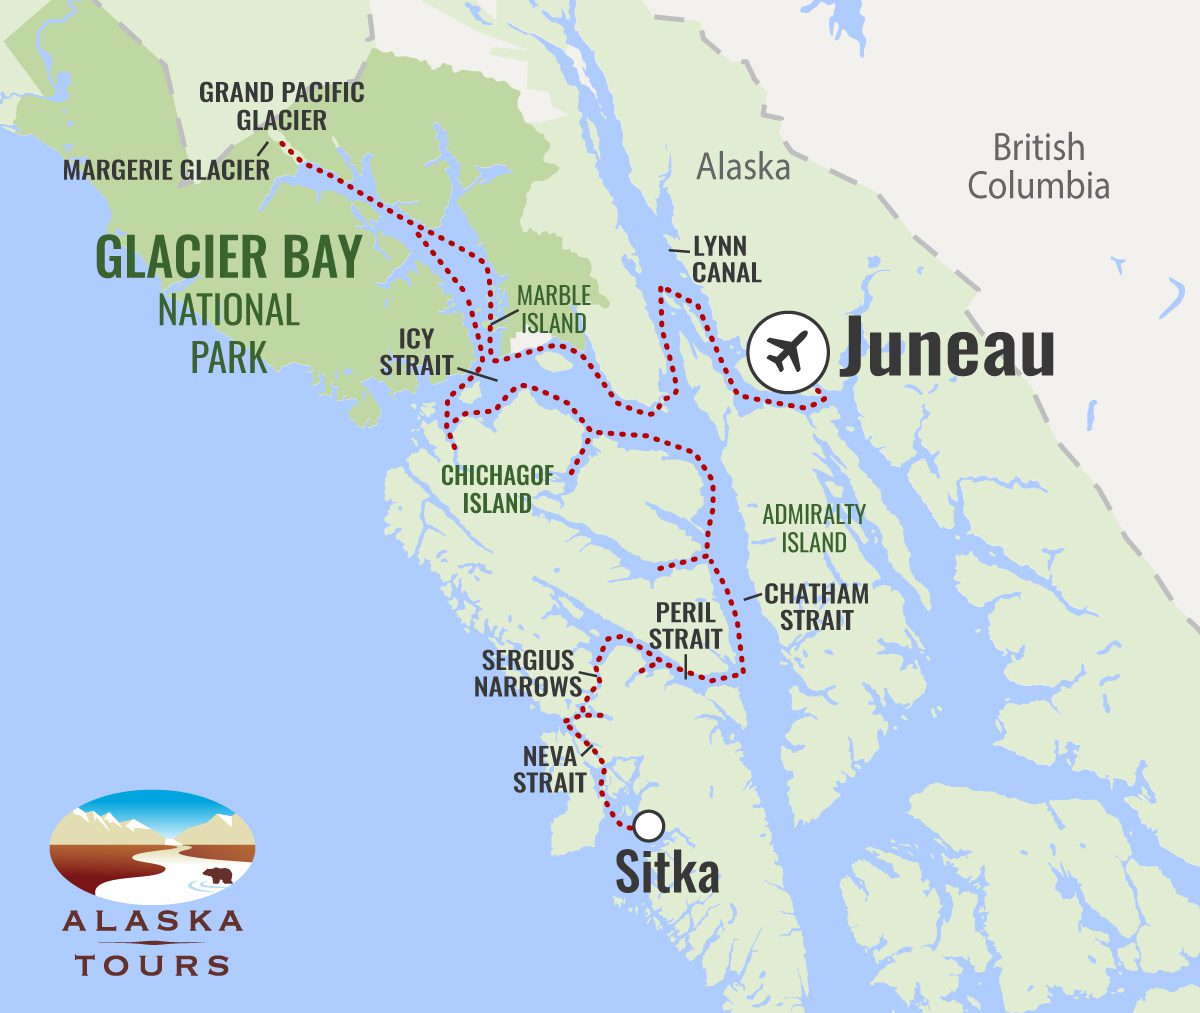 Whittier Alaska Glacier Tour on a Map